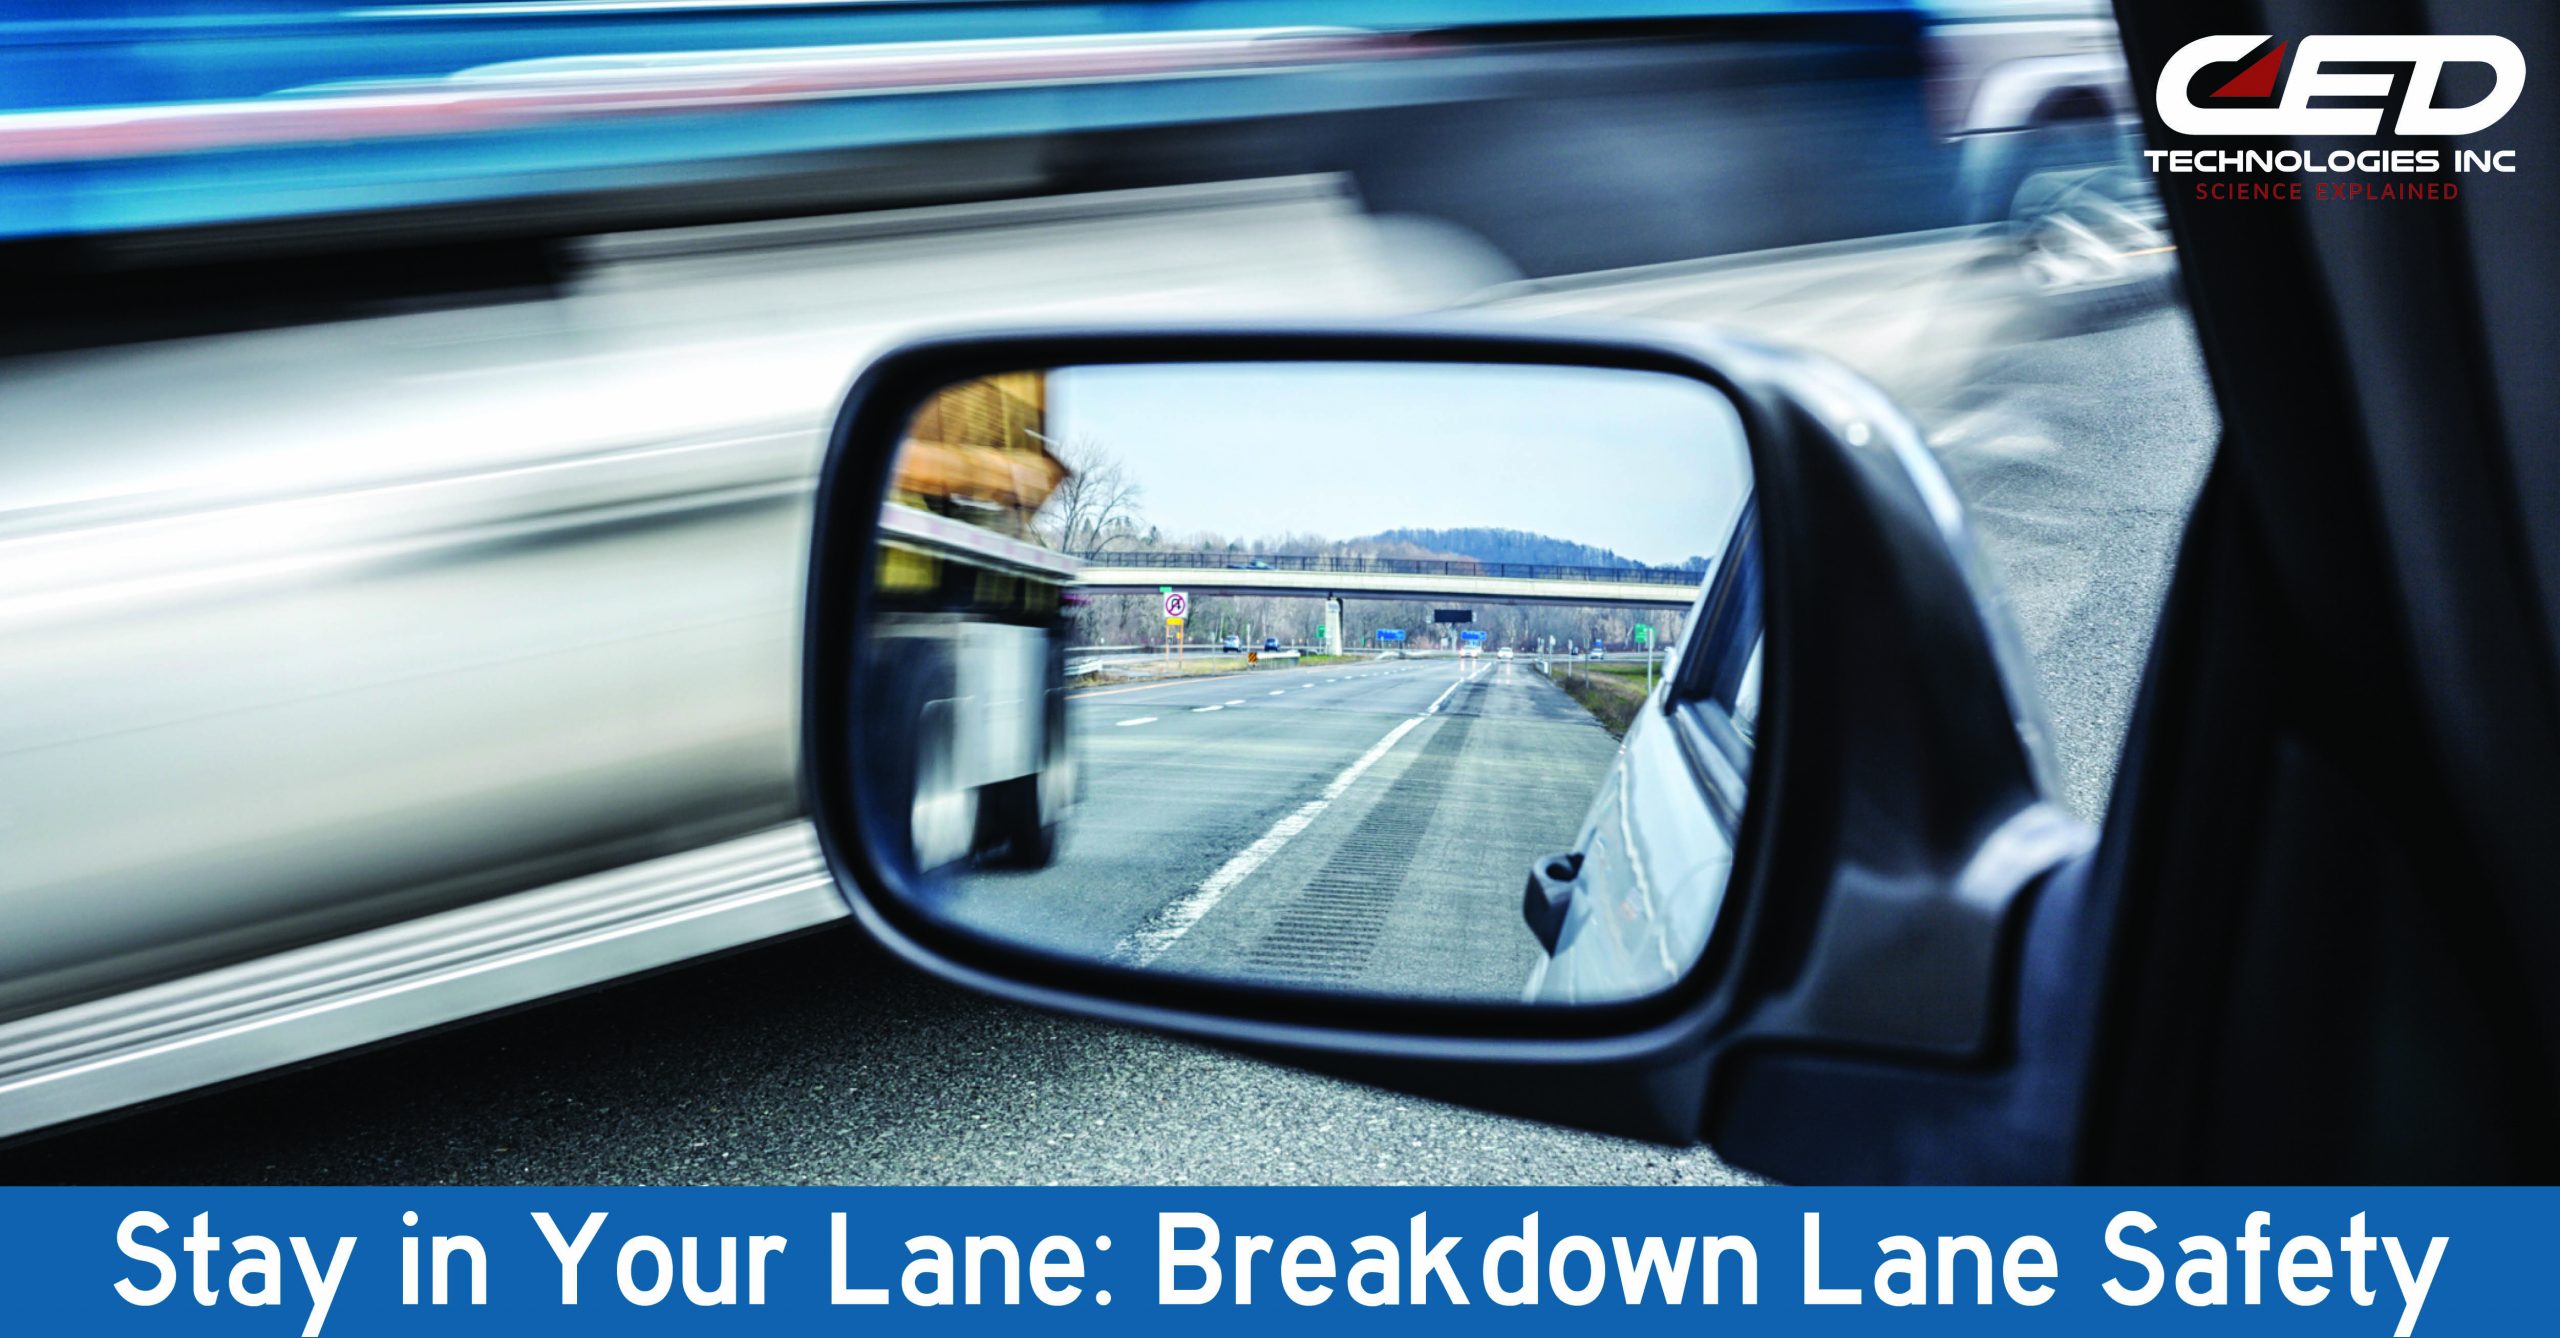 Stay in Your Lane: Breakdown Lane Safety